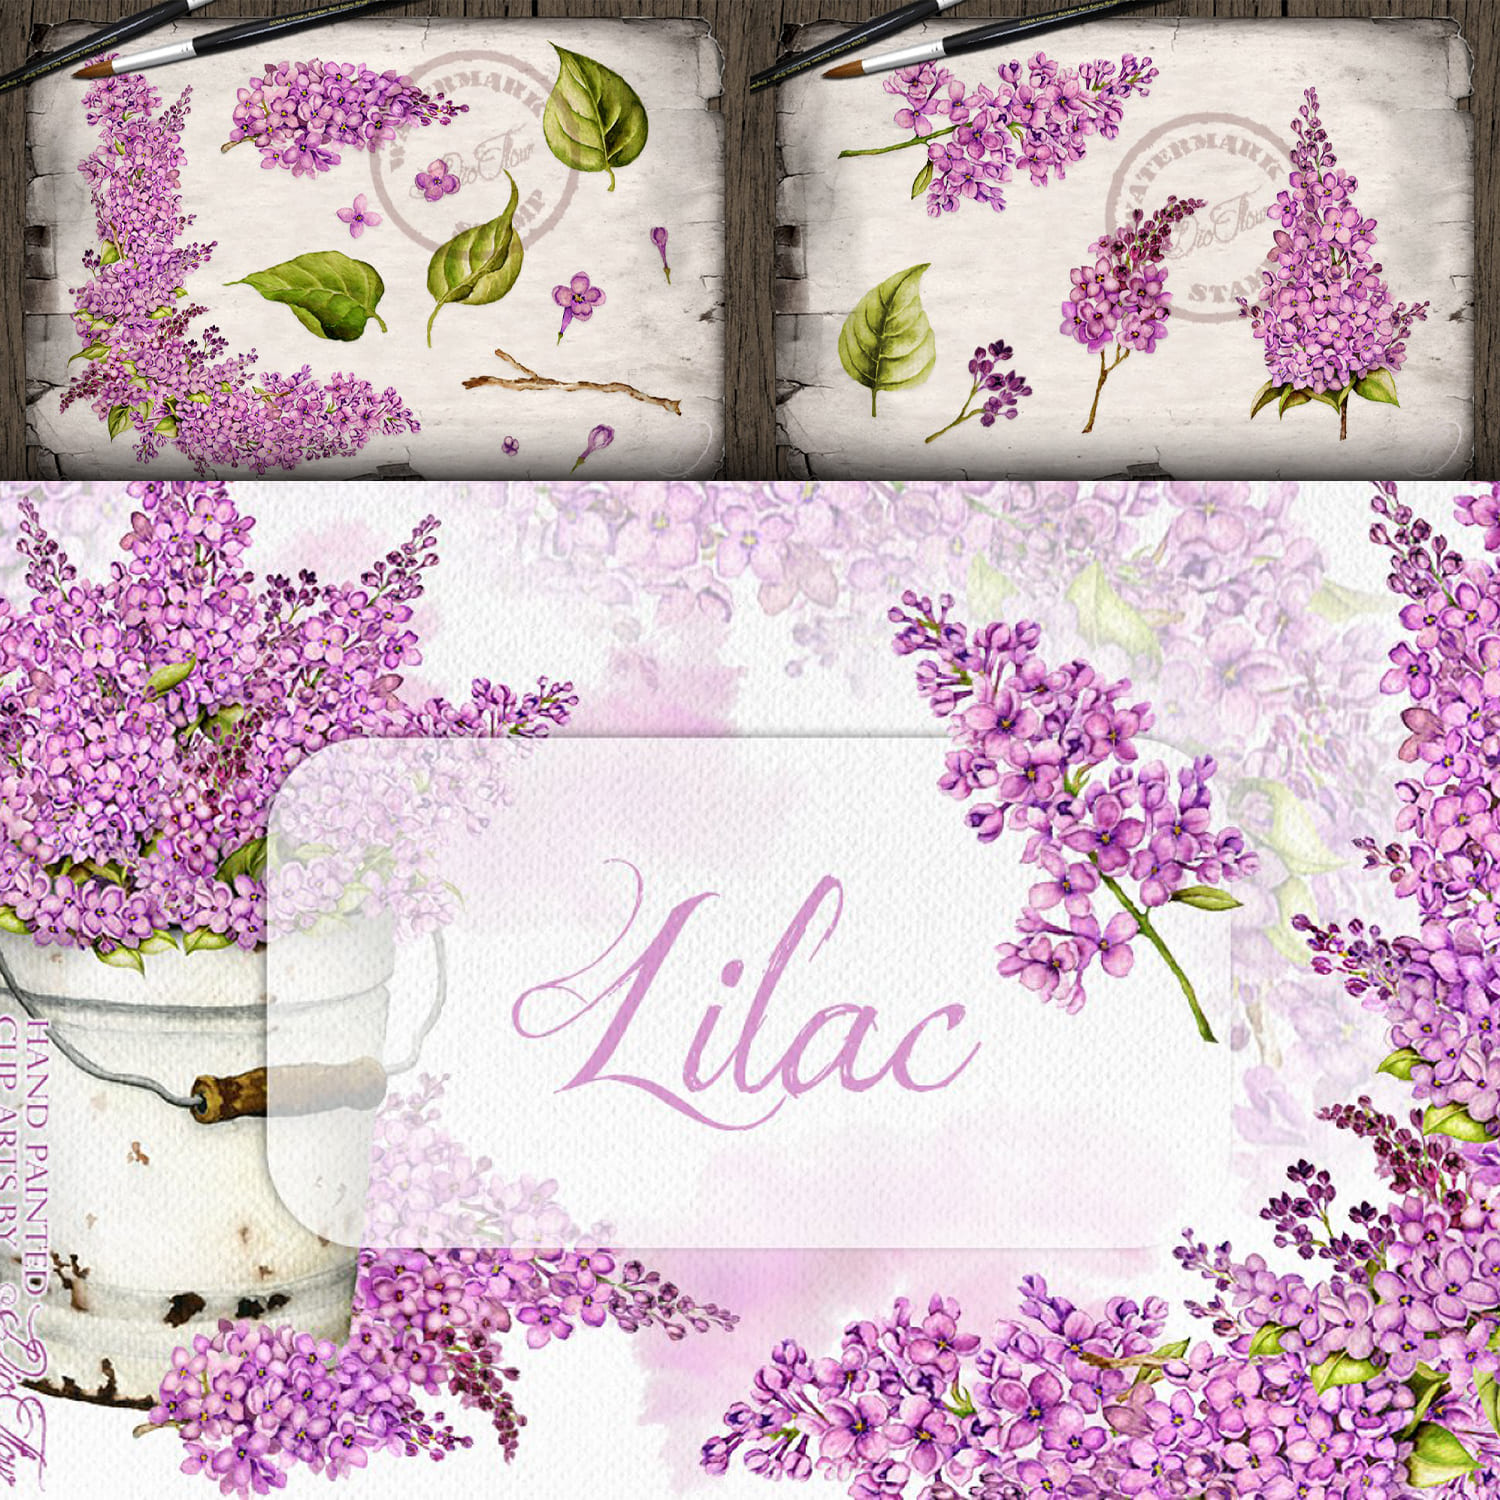 Lilac Watercolor Illustration cover.